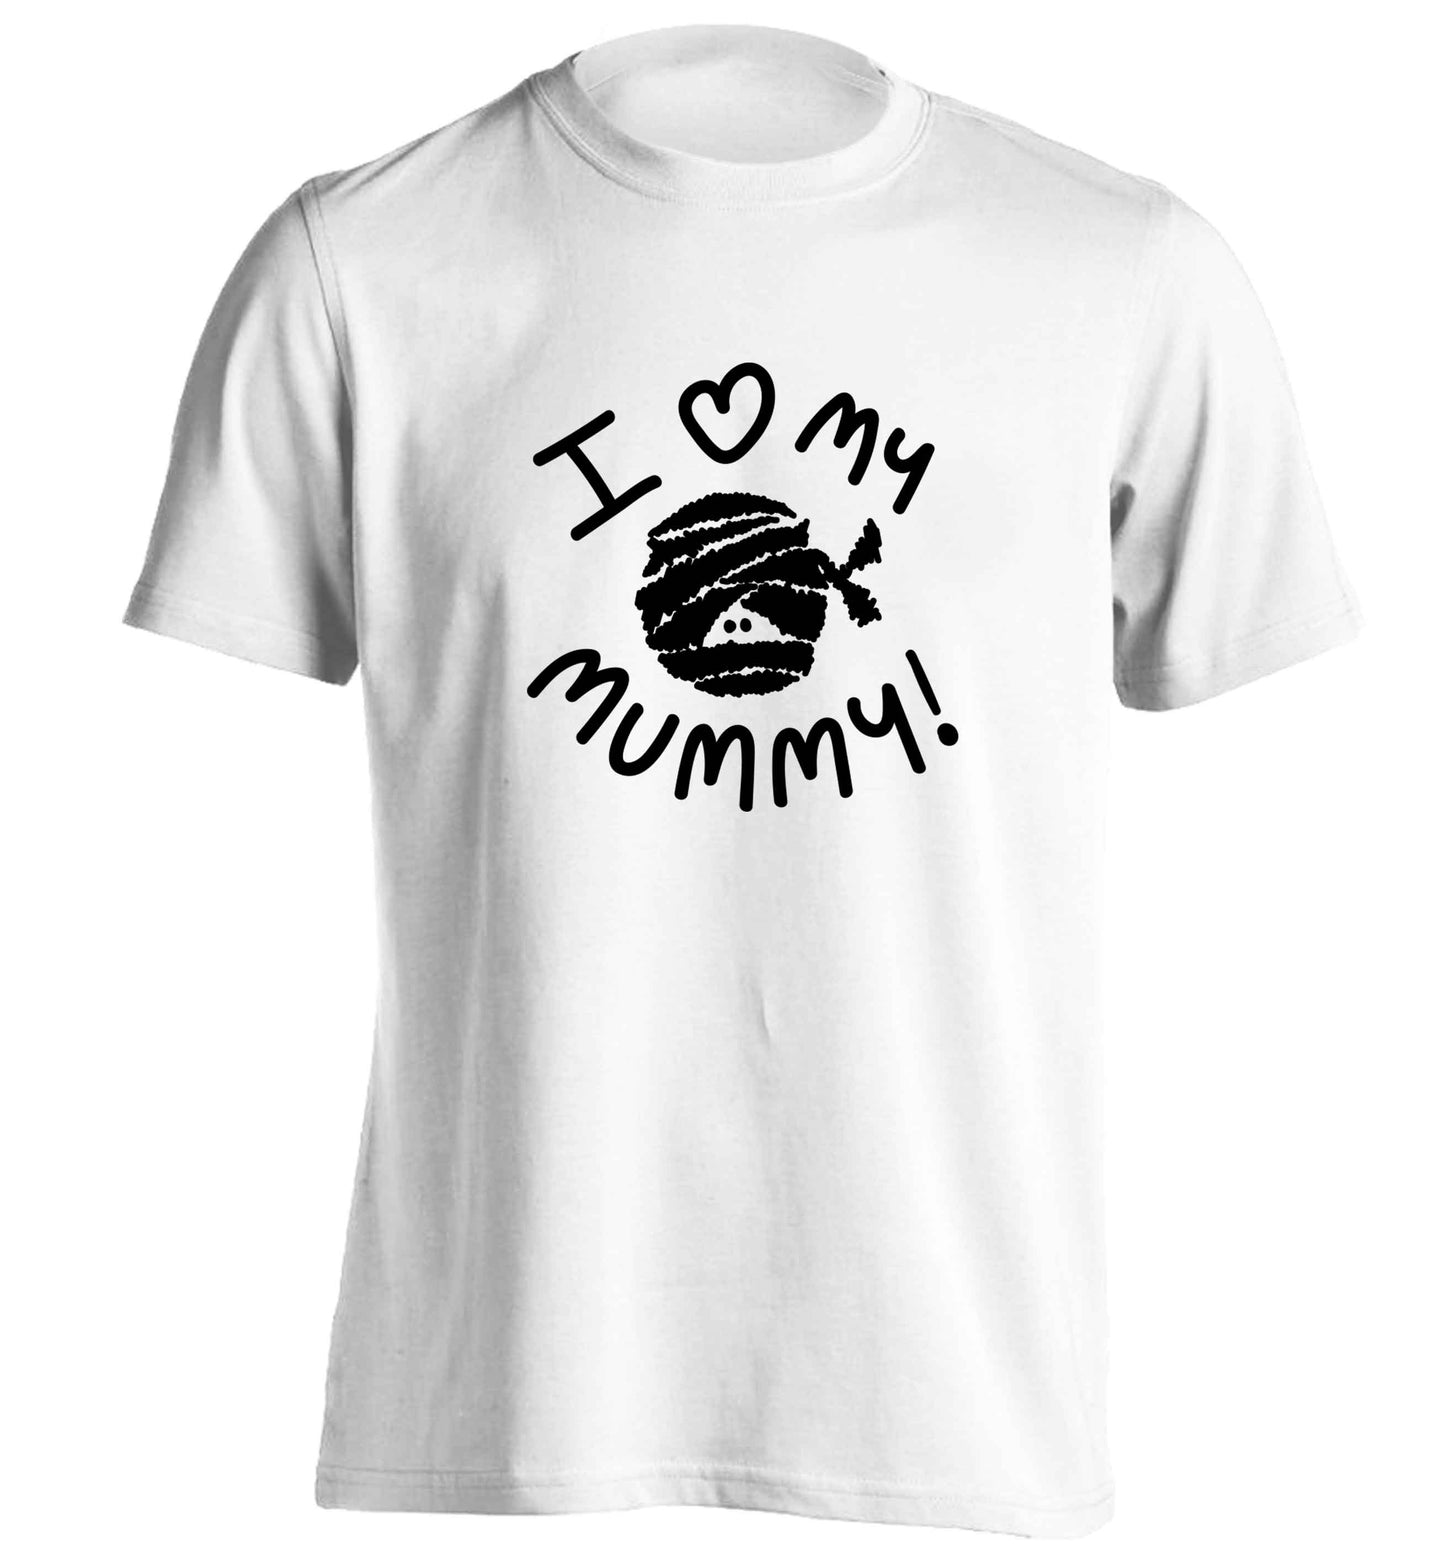 I love my mummy halloween pun adults unisex white Tshirt 2XL